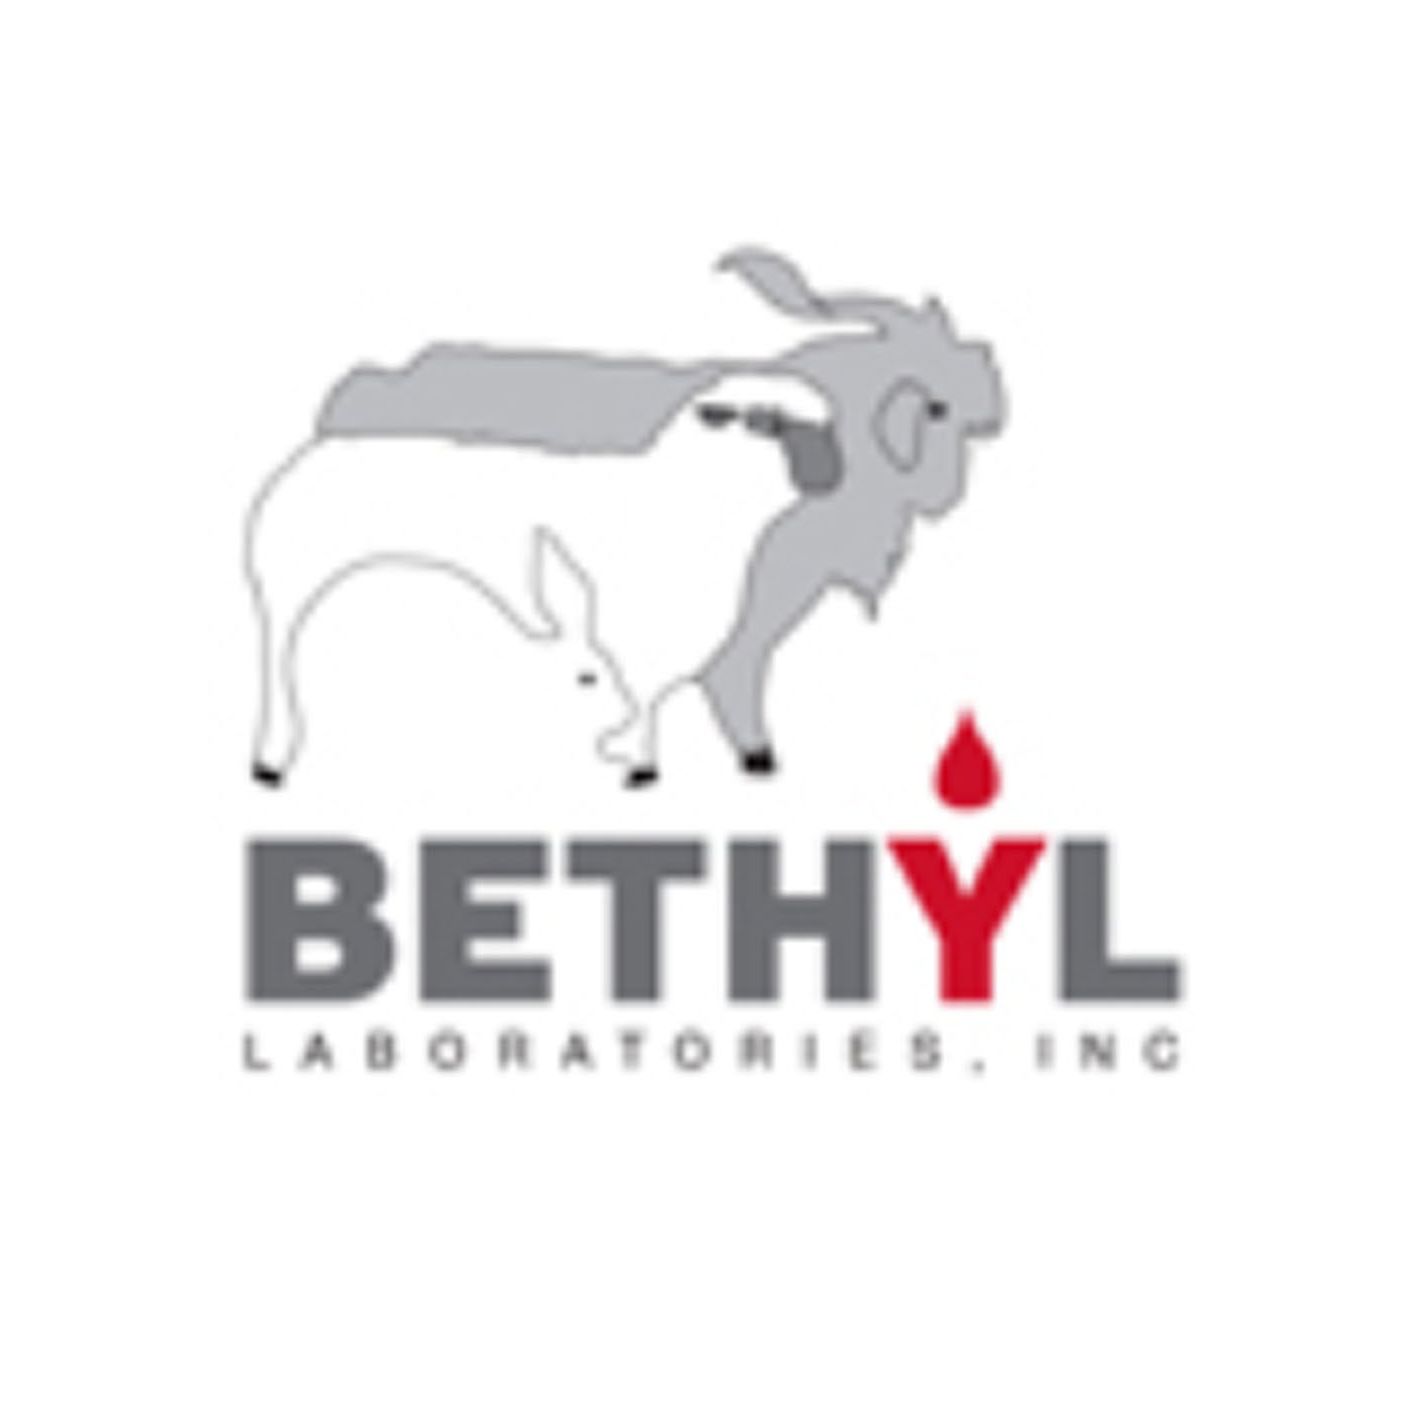 Bethyl兔多克隆抗体、蛋白质、次级抗体、免疫球蛋白